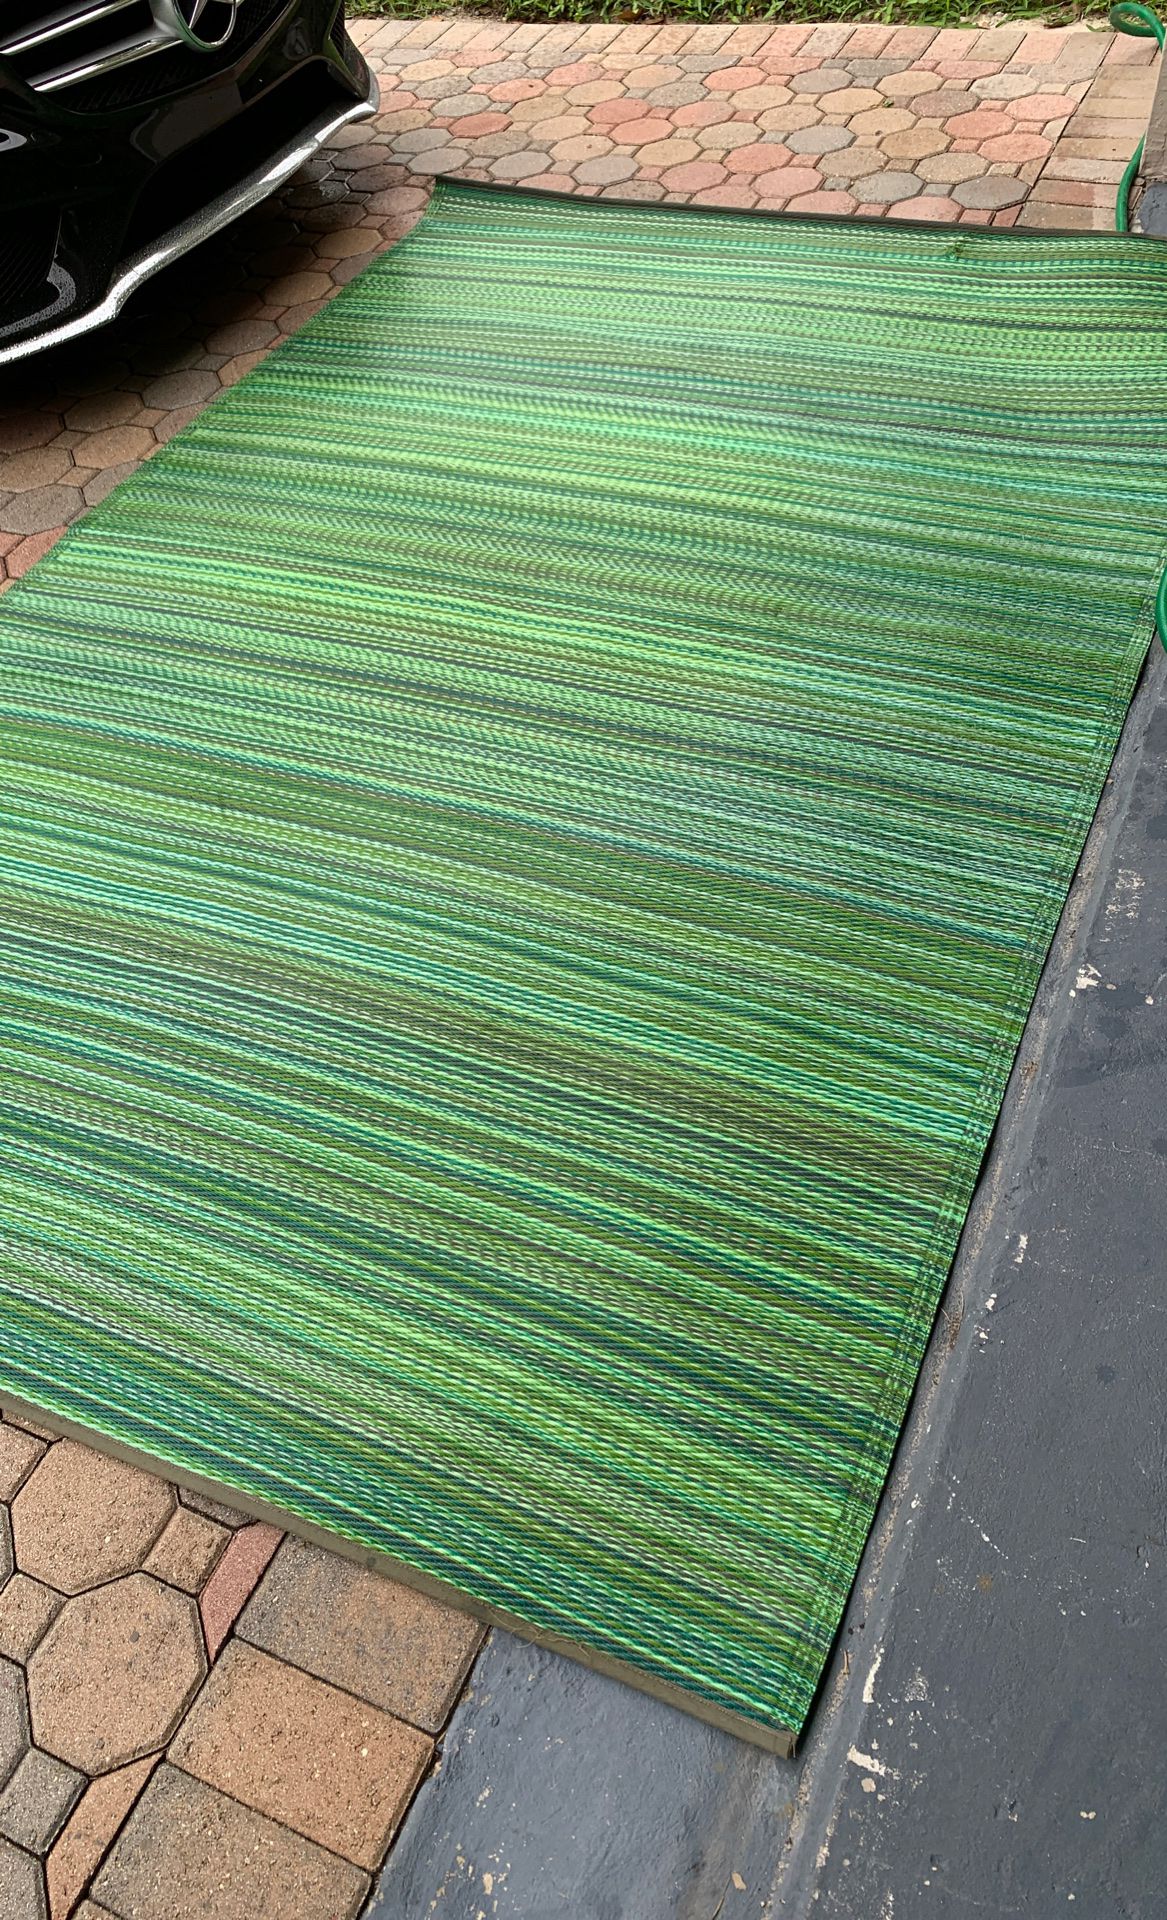 Outdoor green throw rug plastic rattan 6x9